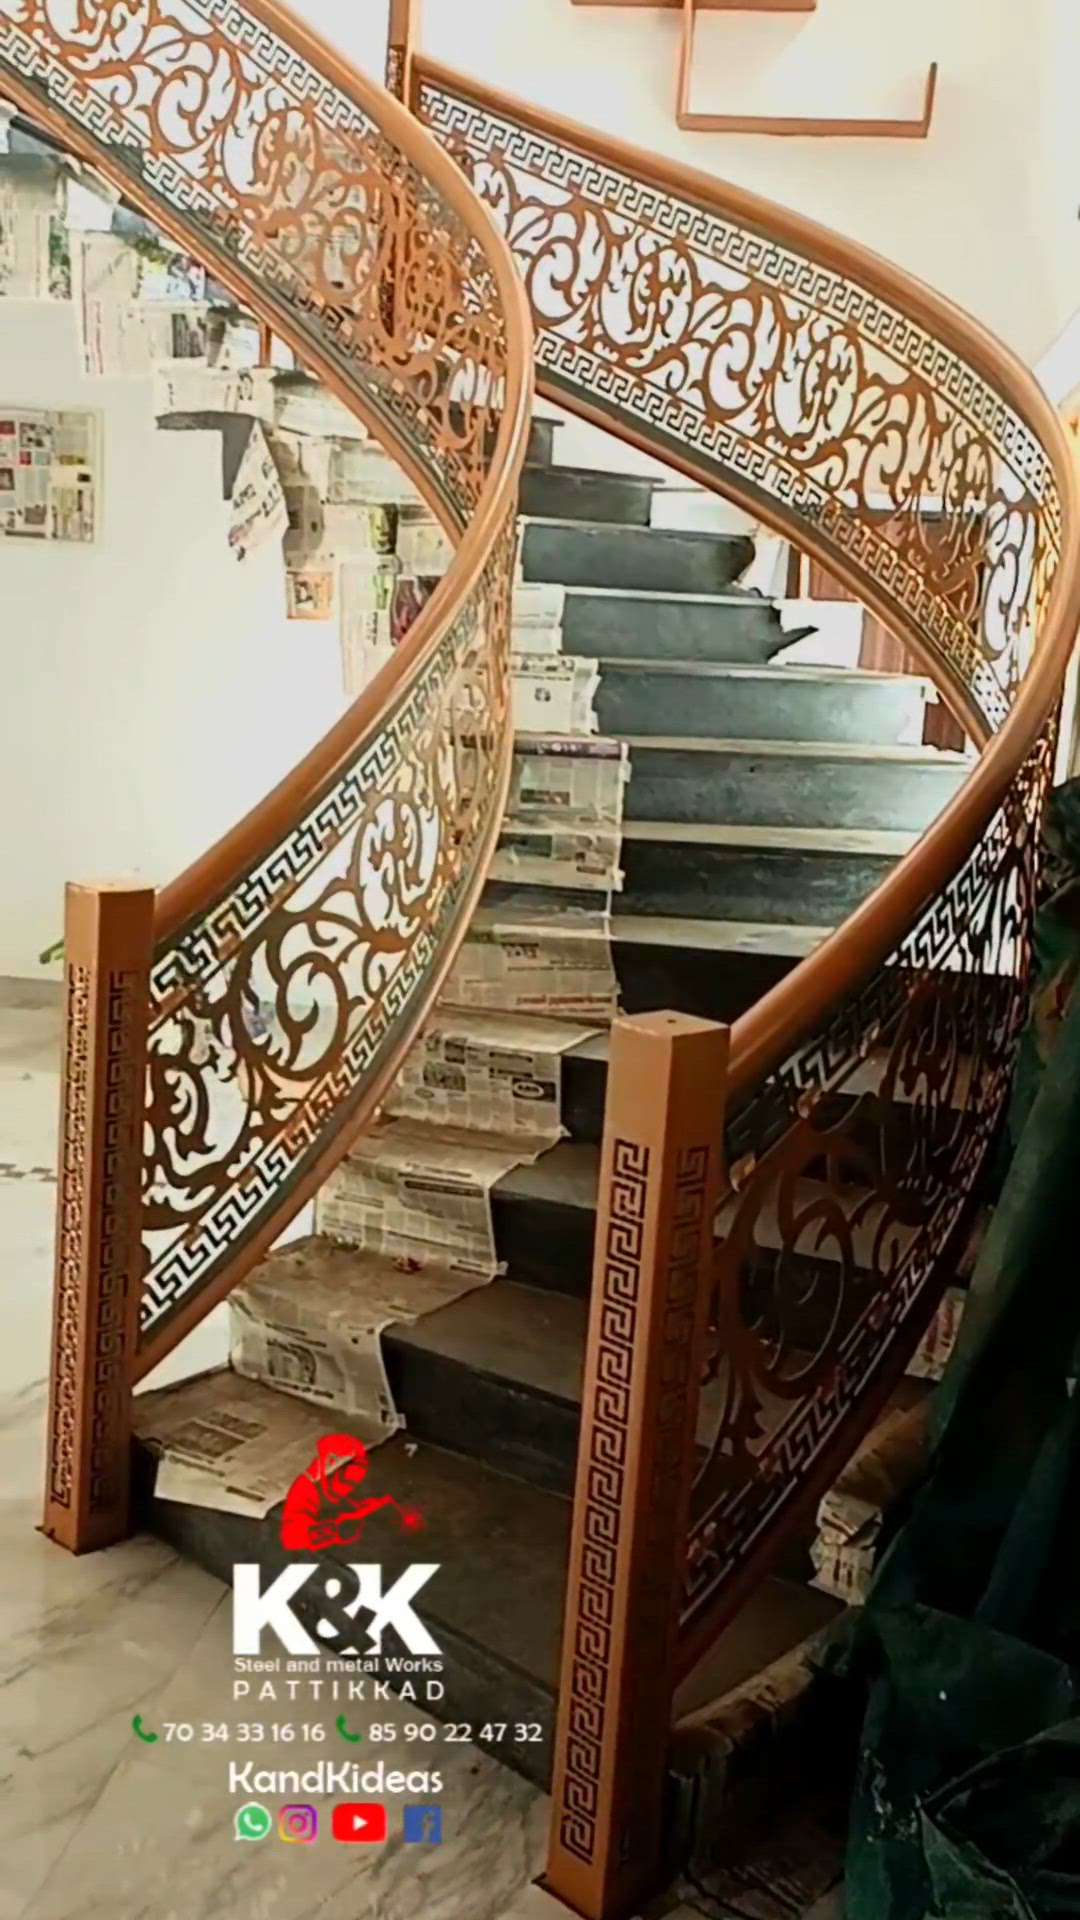 cnc  #cnc  #kandk  #top  #today  #classic  #StaircaseDecors  #staircase  #handrailing  #handrail  #industrialdesign  #work  #pattikkad  #karyavattam